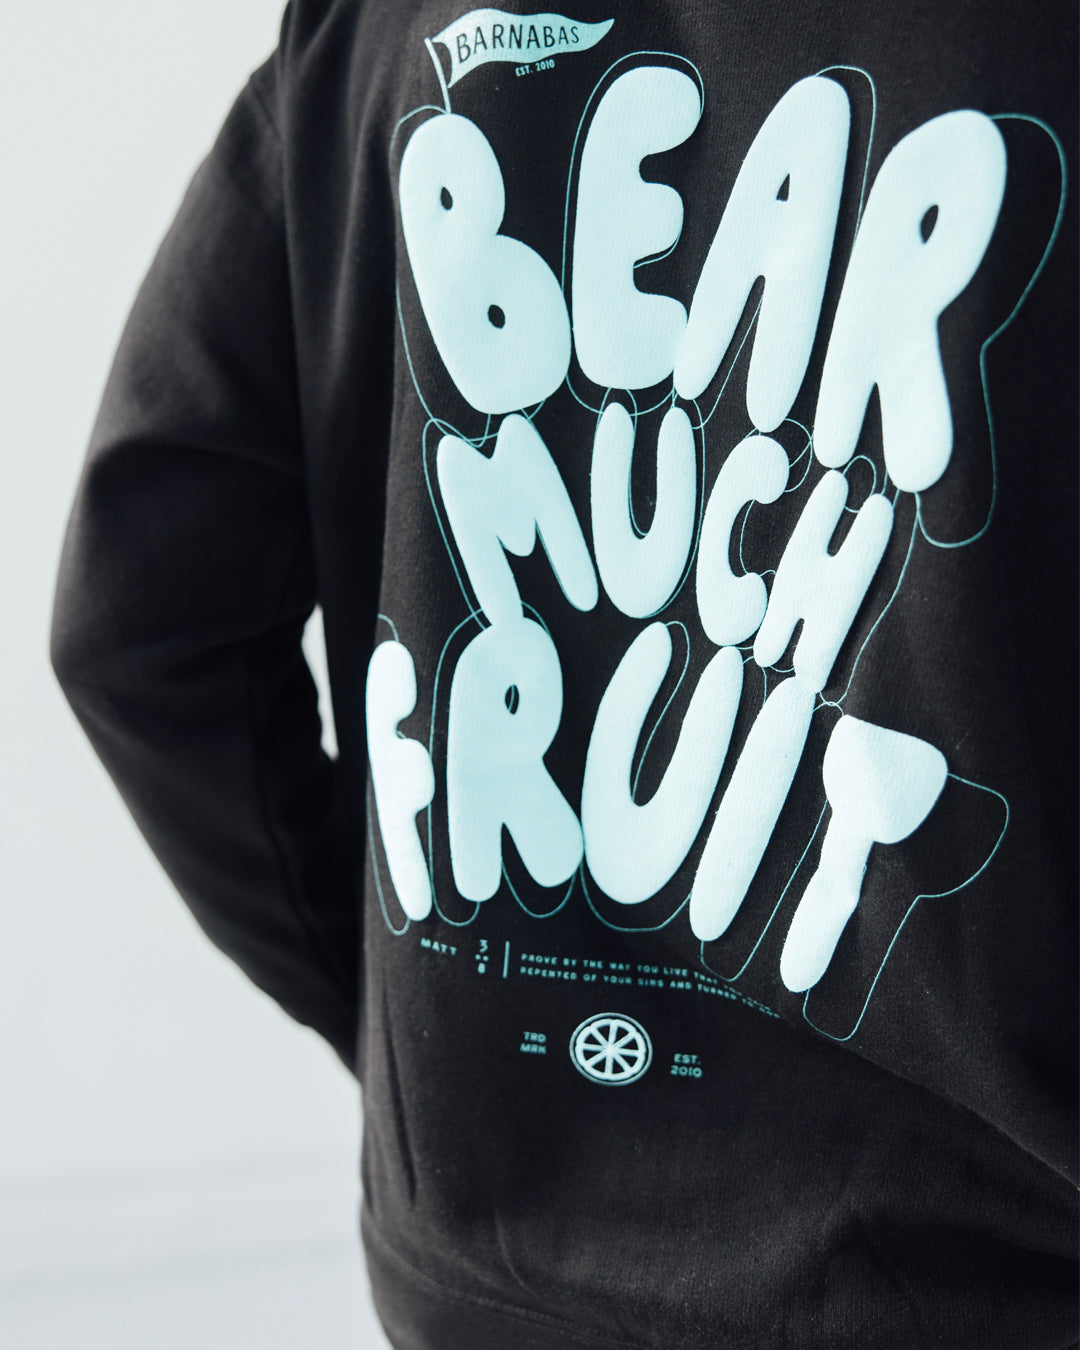 Barnabas: BearMuchFruitHooded Sweatshirt - Barnabas Clothing Co.